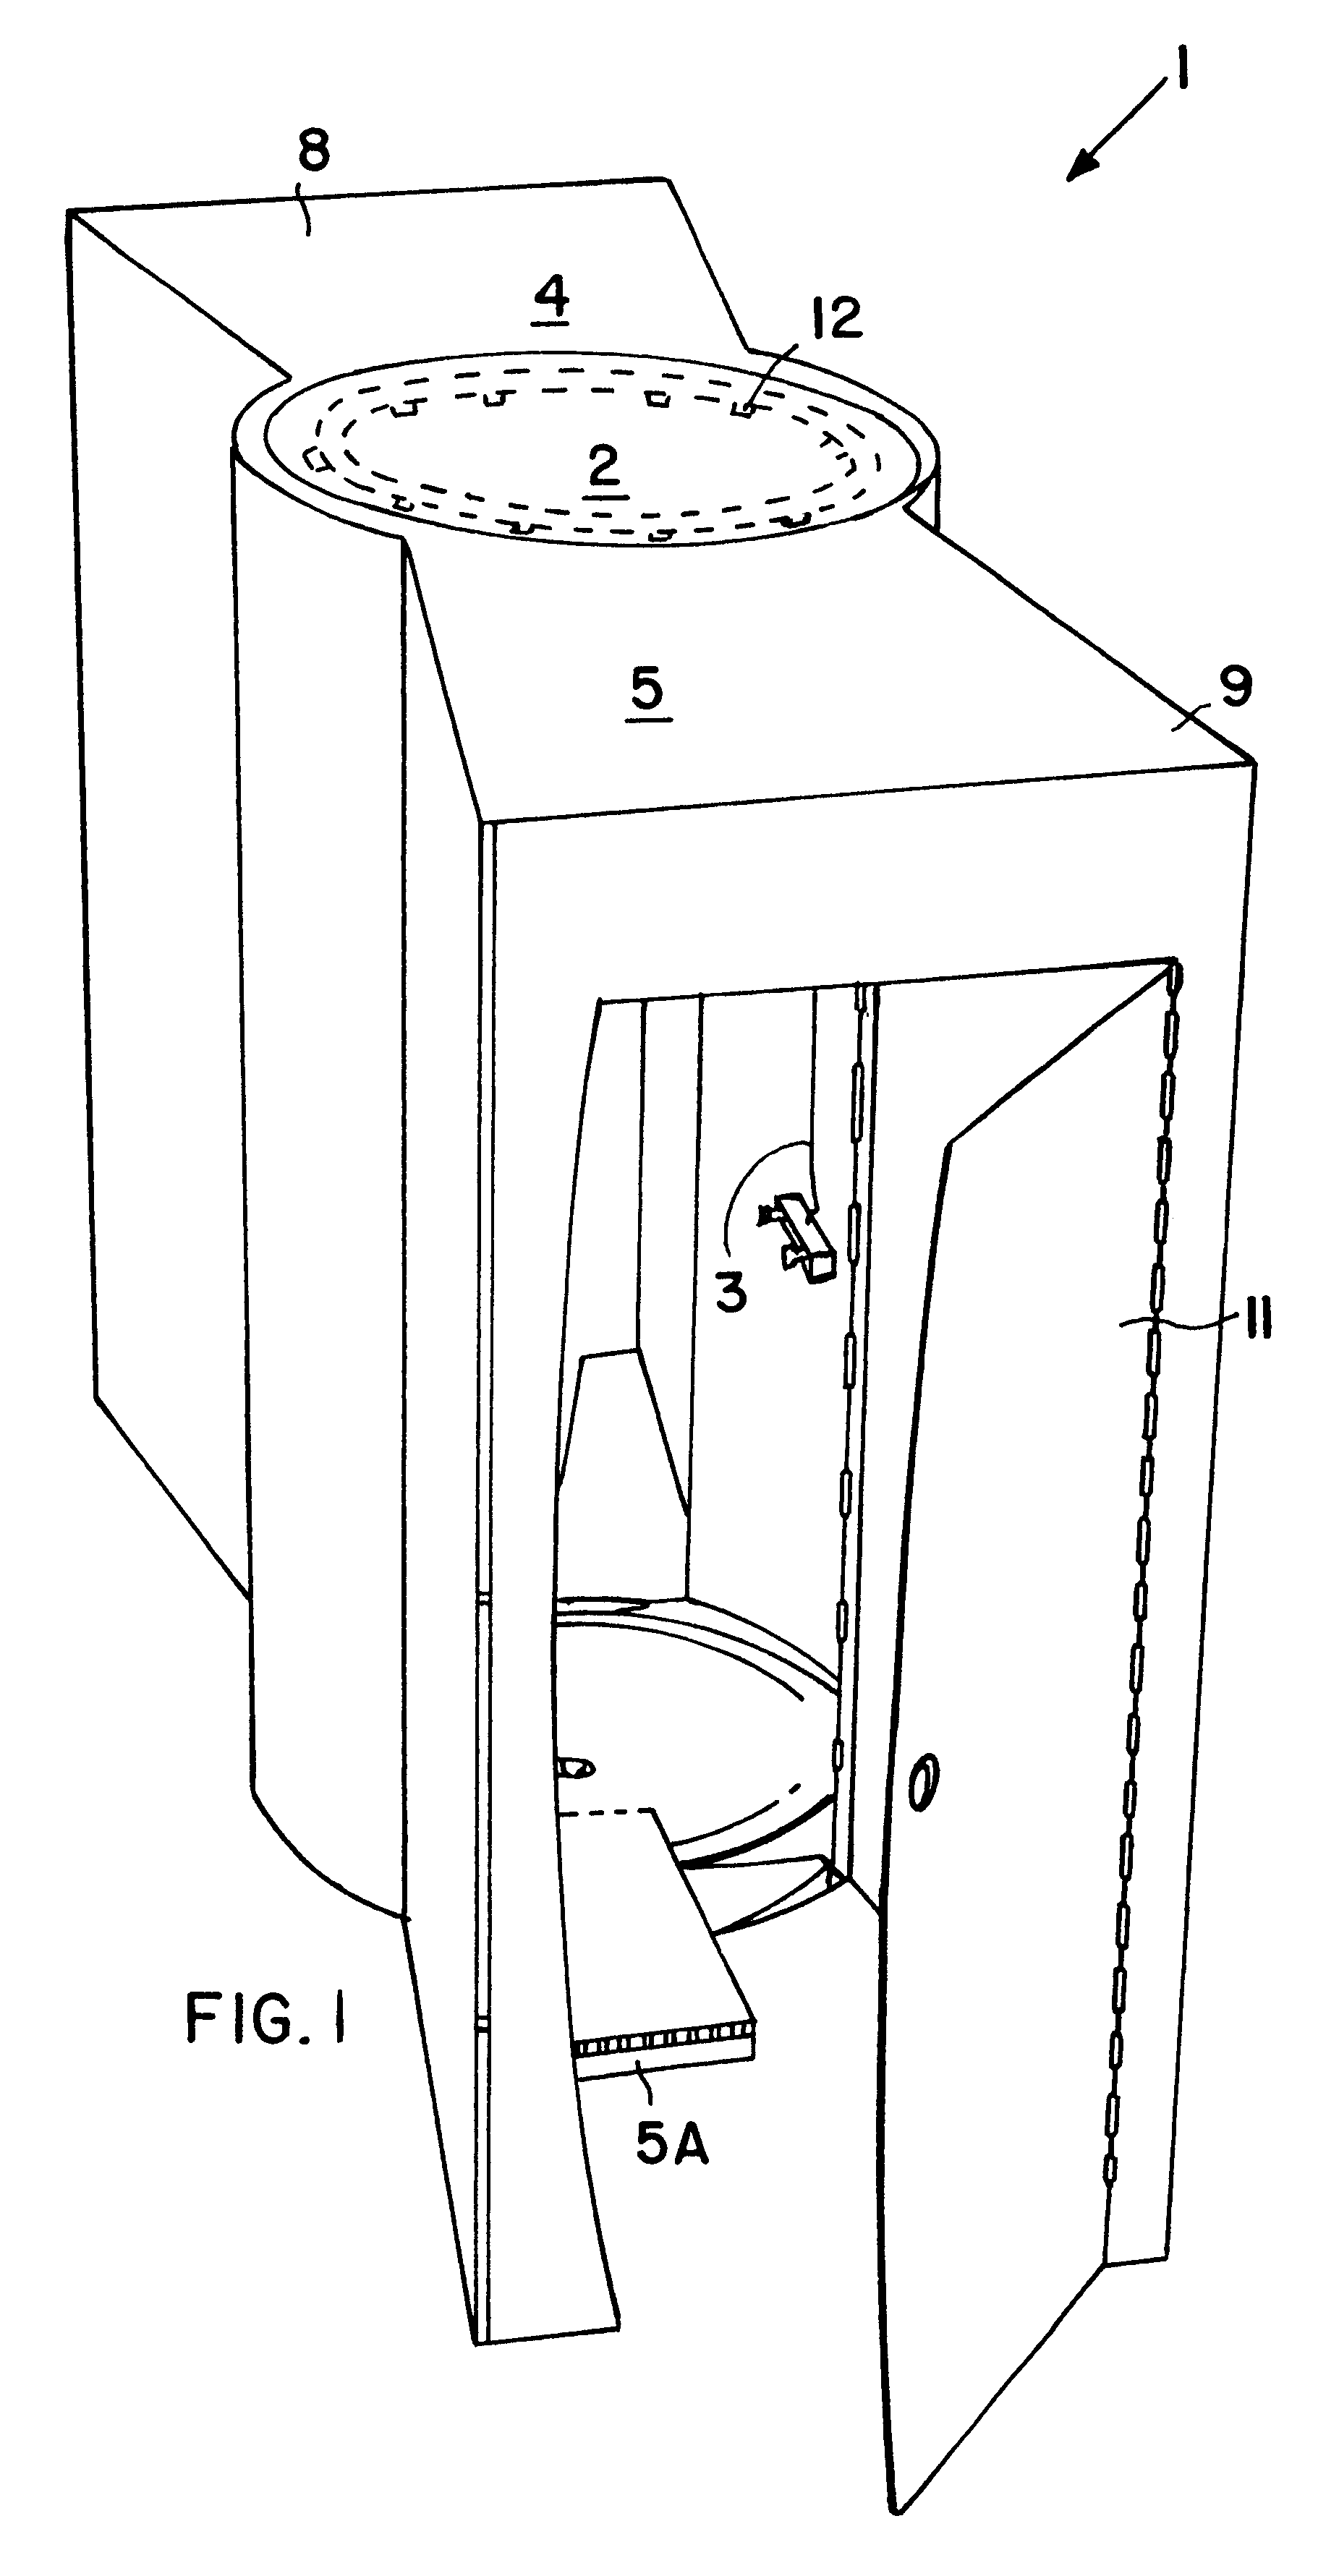 Optimized shower arrangement for high volume use